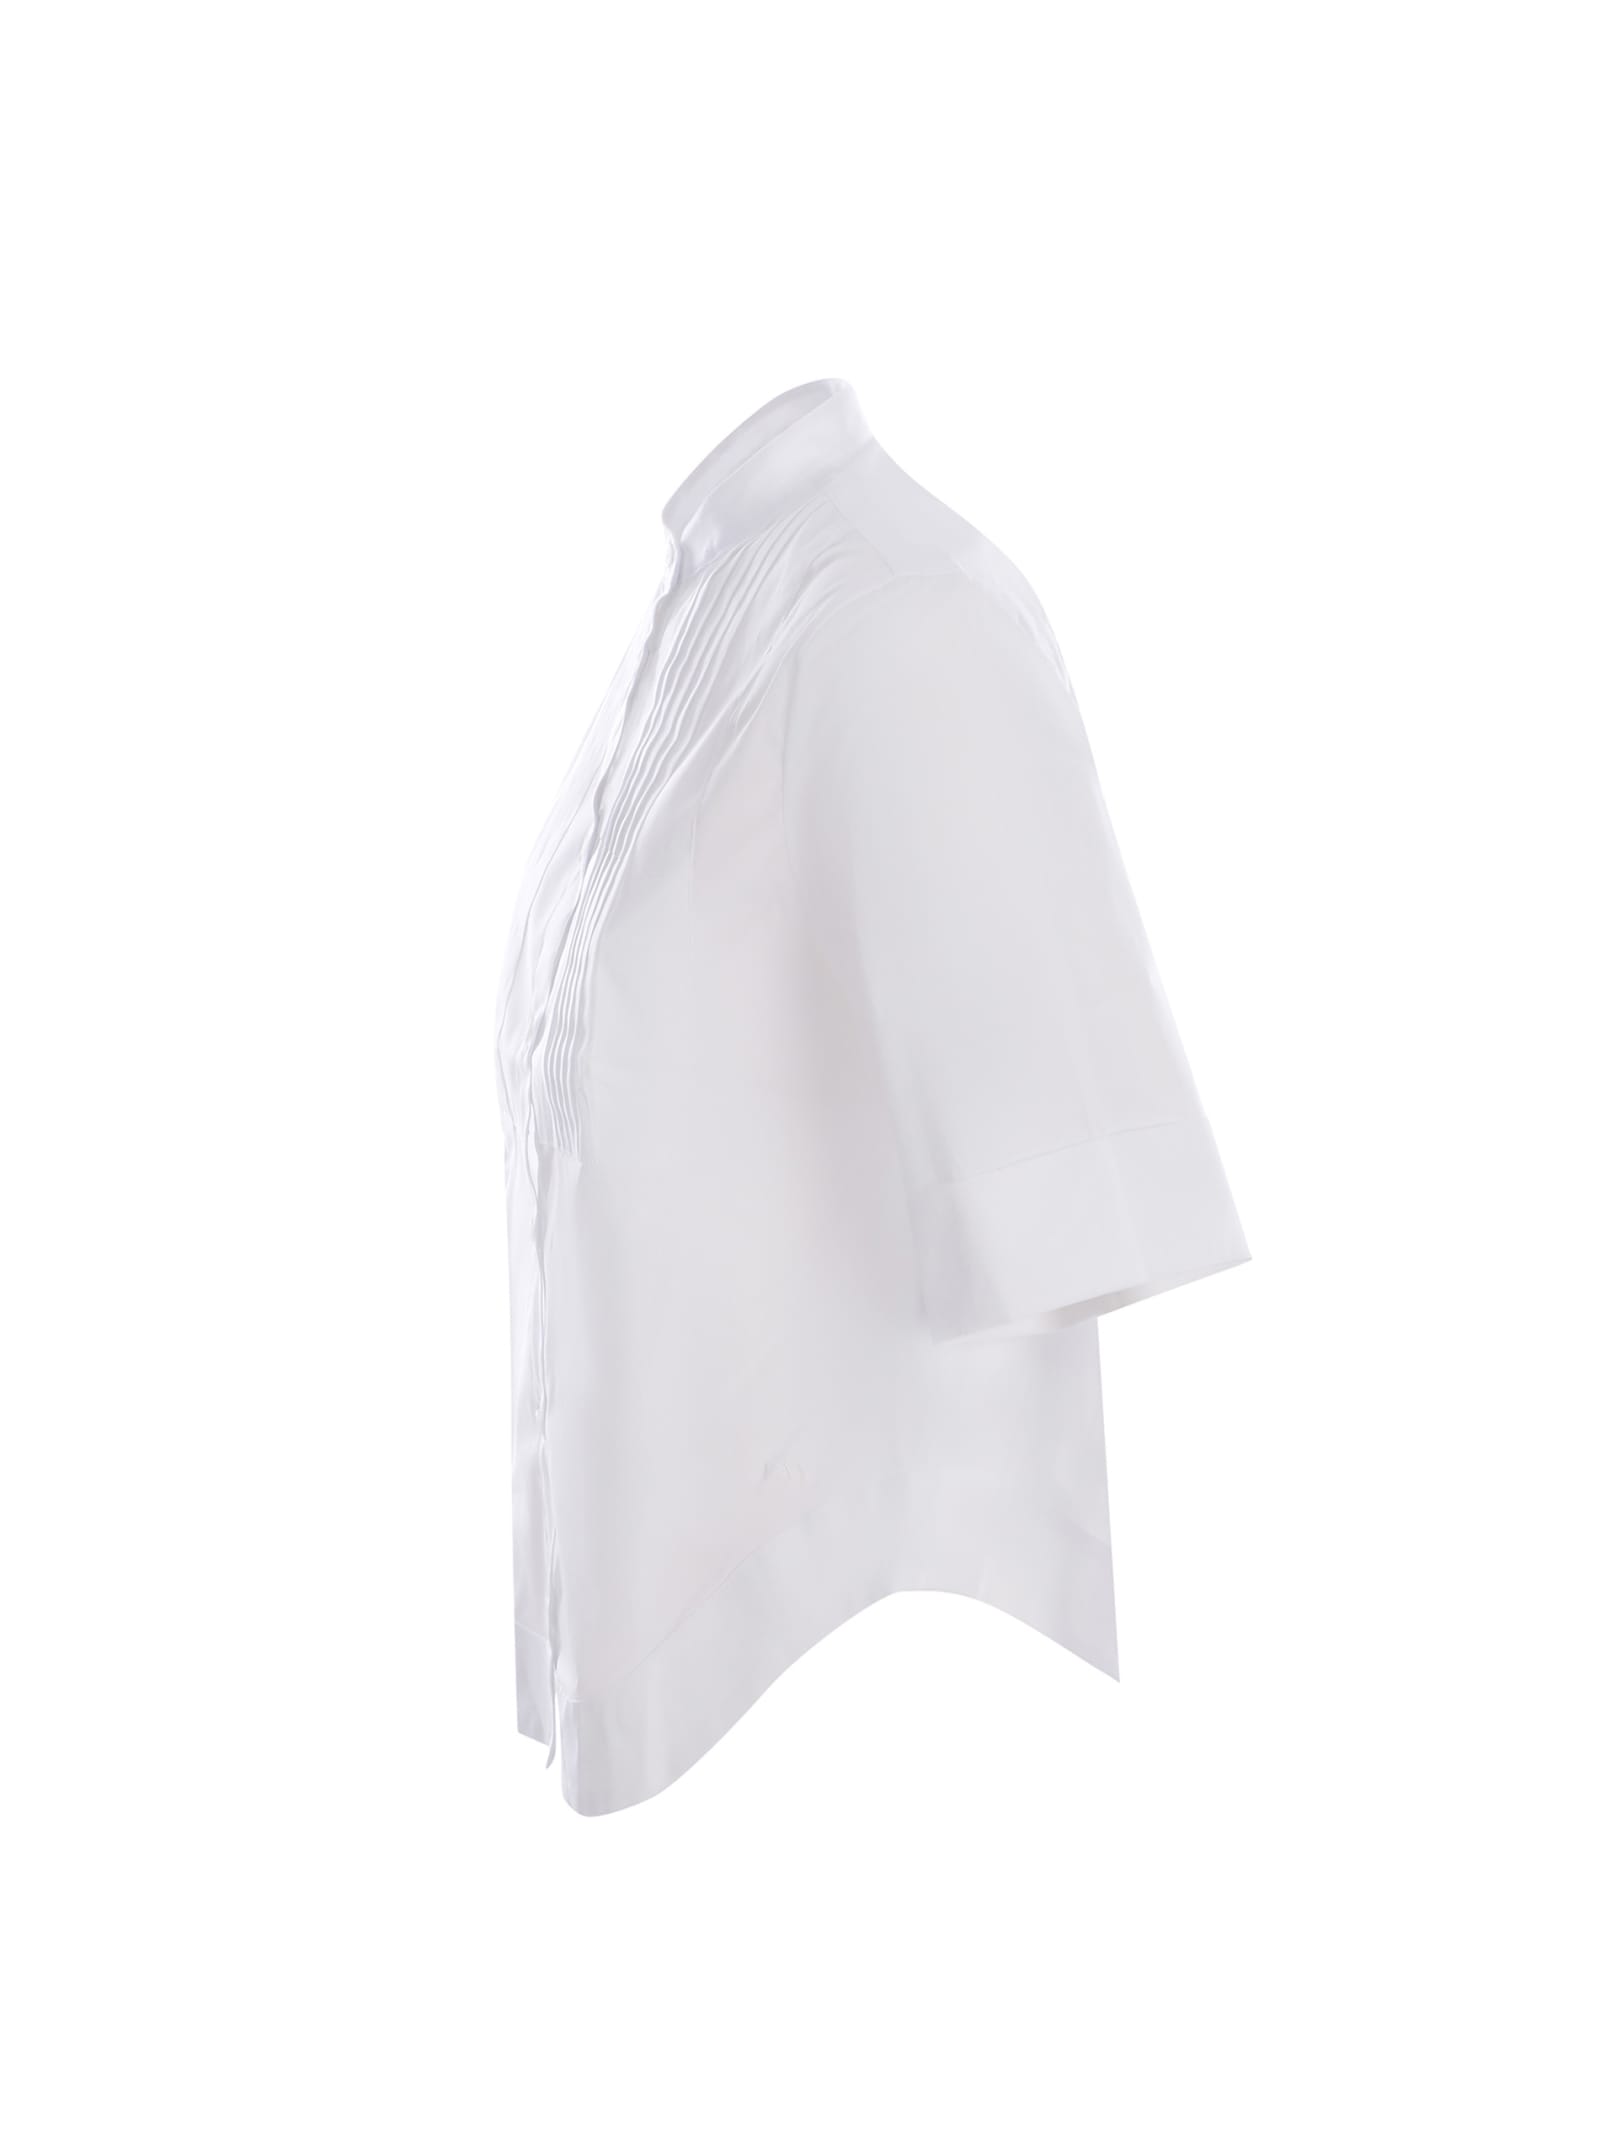 Shop Fay Shirt  Made Of Cotton Poplin In Bianco